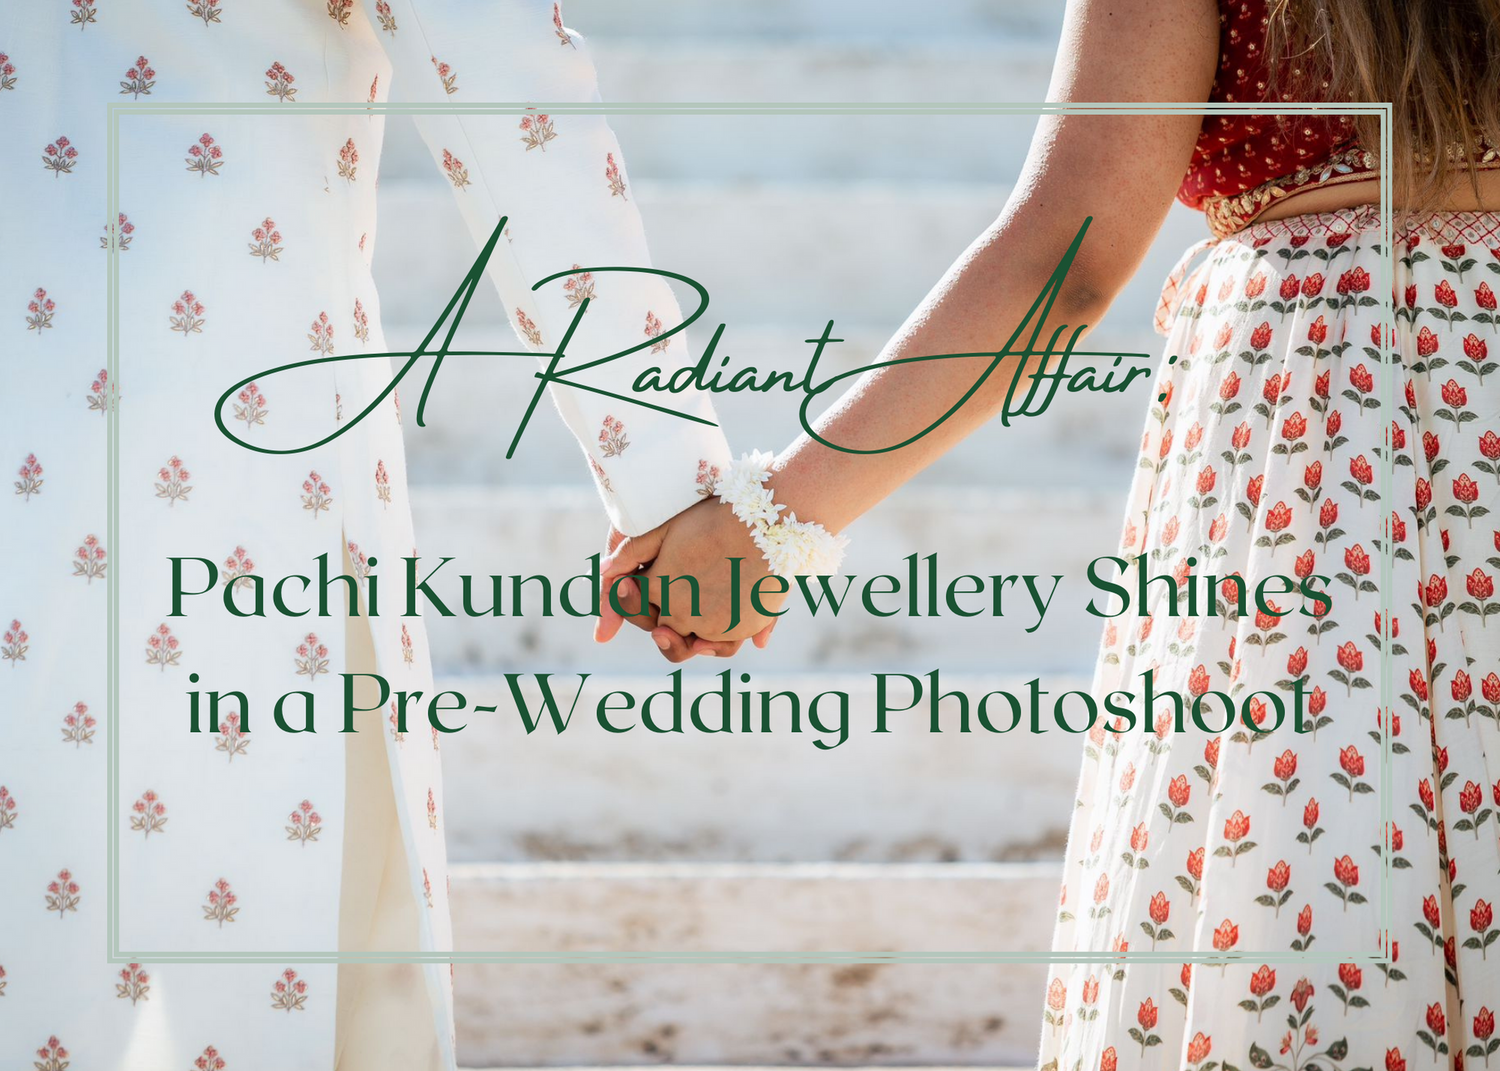 A Radiant Affair: Pachi Kundan Jewellery Shines in a Pre-Wedding Photoshoot